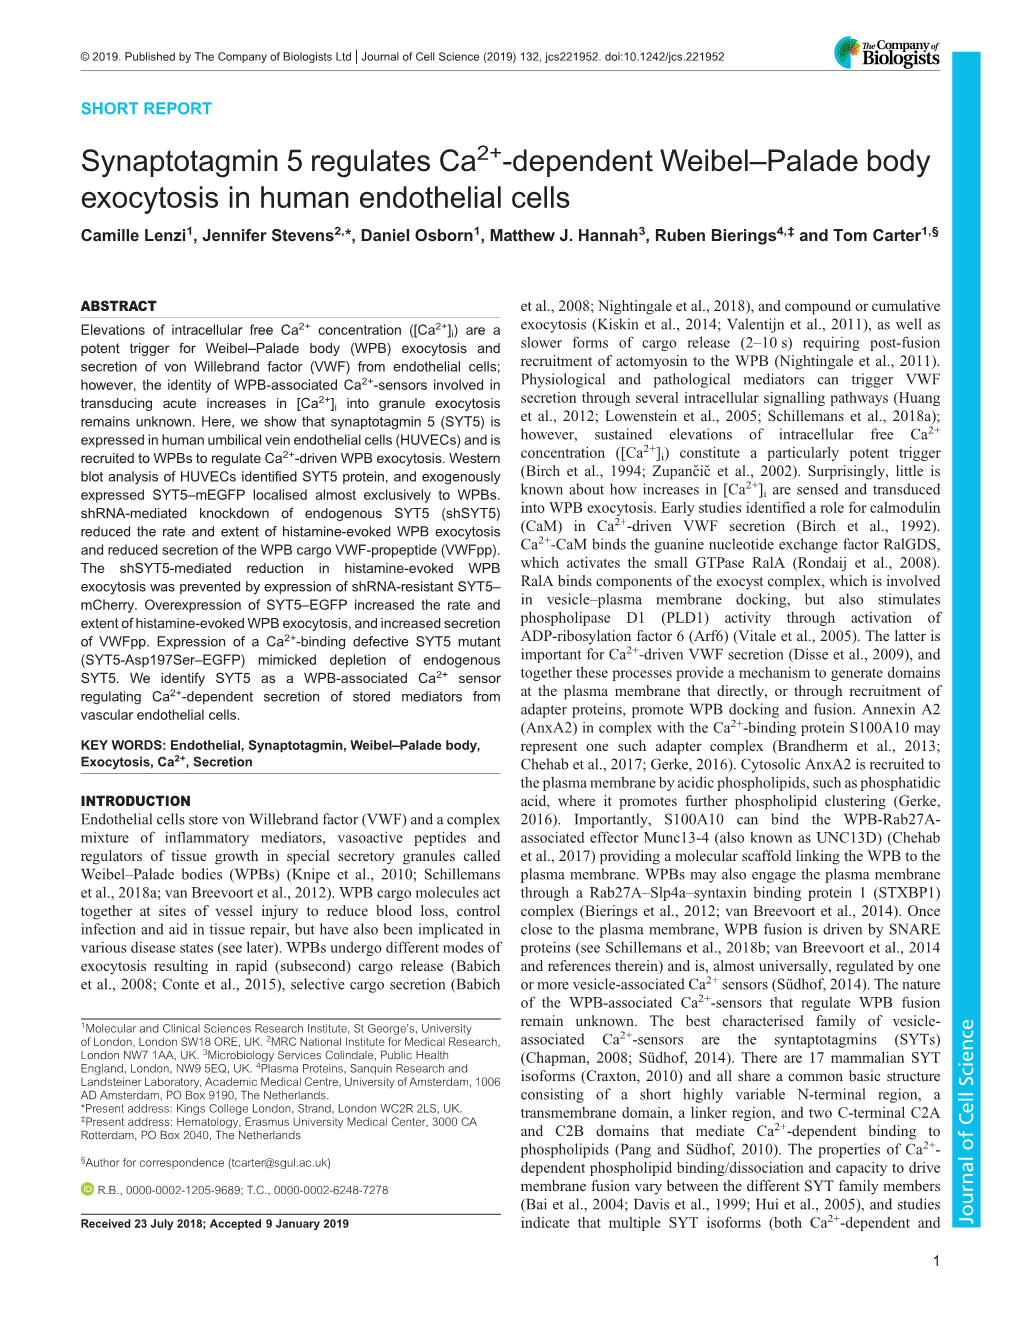 Synaptotagmin 5 Regulates Ca2+-Dependent Weibel–Palade Body Exocytosis in Human Endothelial Cells Camille Lenzi1, Jennifer Stevens2,*, Daniel Osborn1, Matthew J